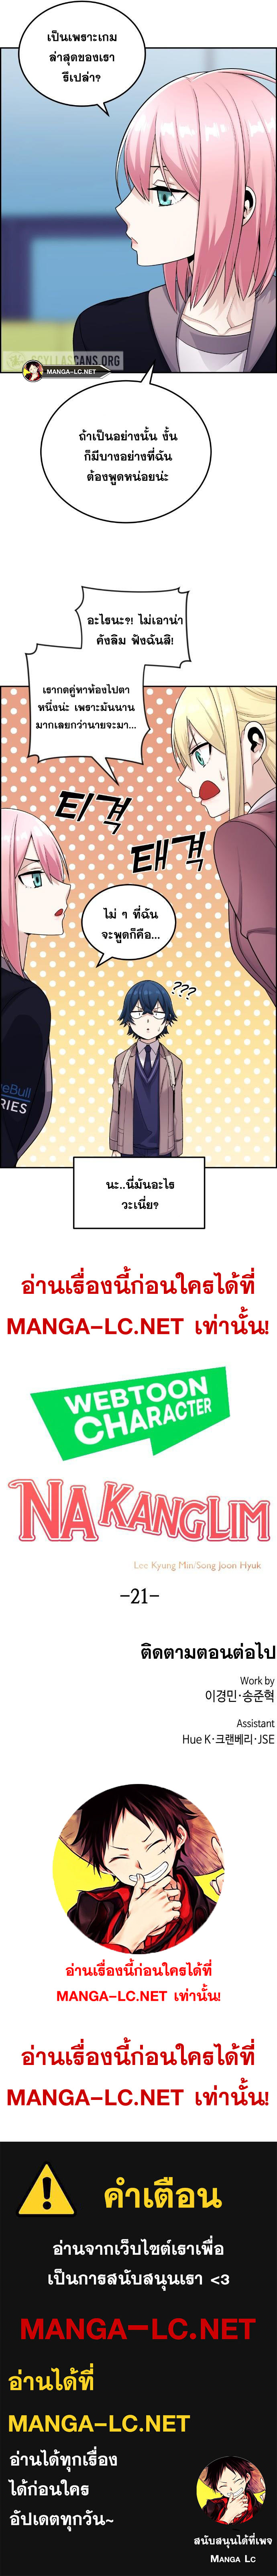 Webtoon Character Na Kang Lim ร ยธโ€ขร ยธยญร ยธโขร ยธโ€”ร ยธยตร ยนห 21 (11)